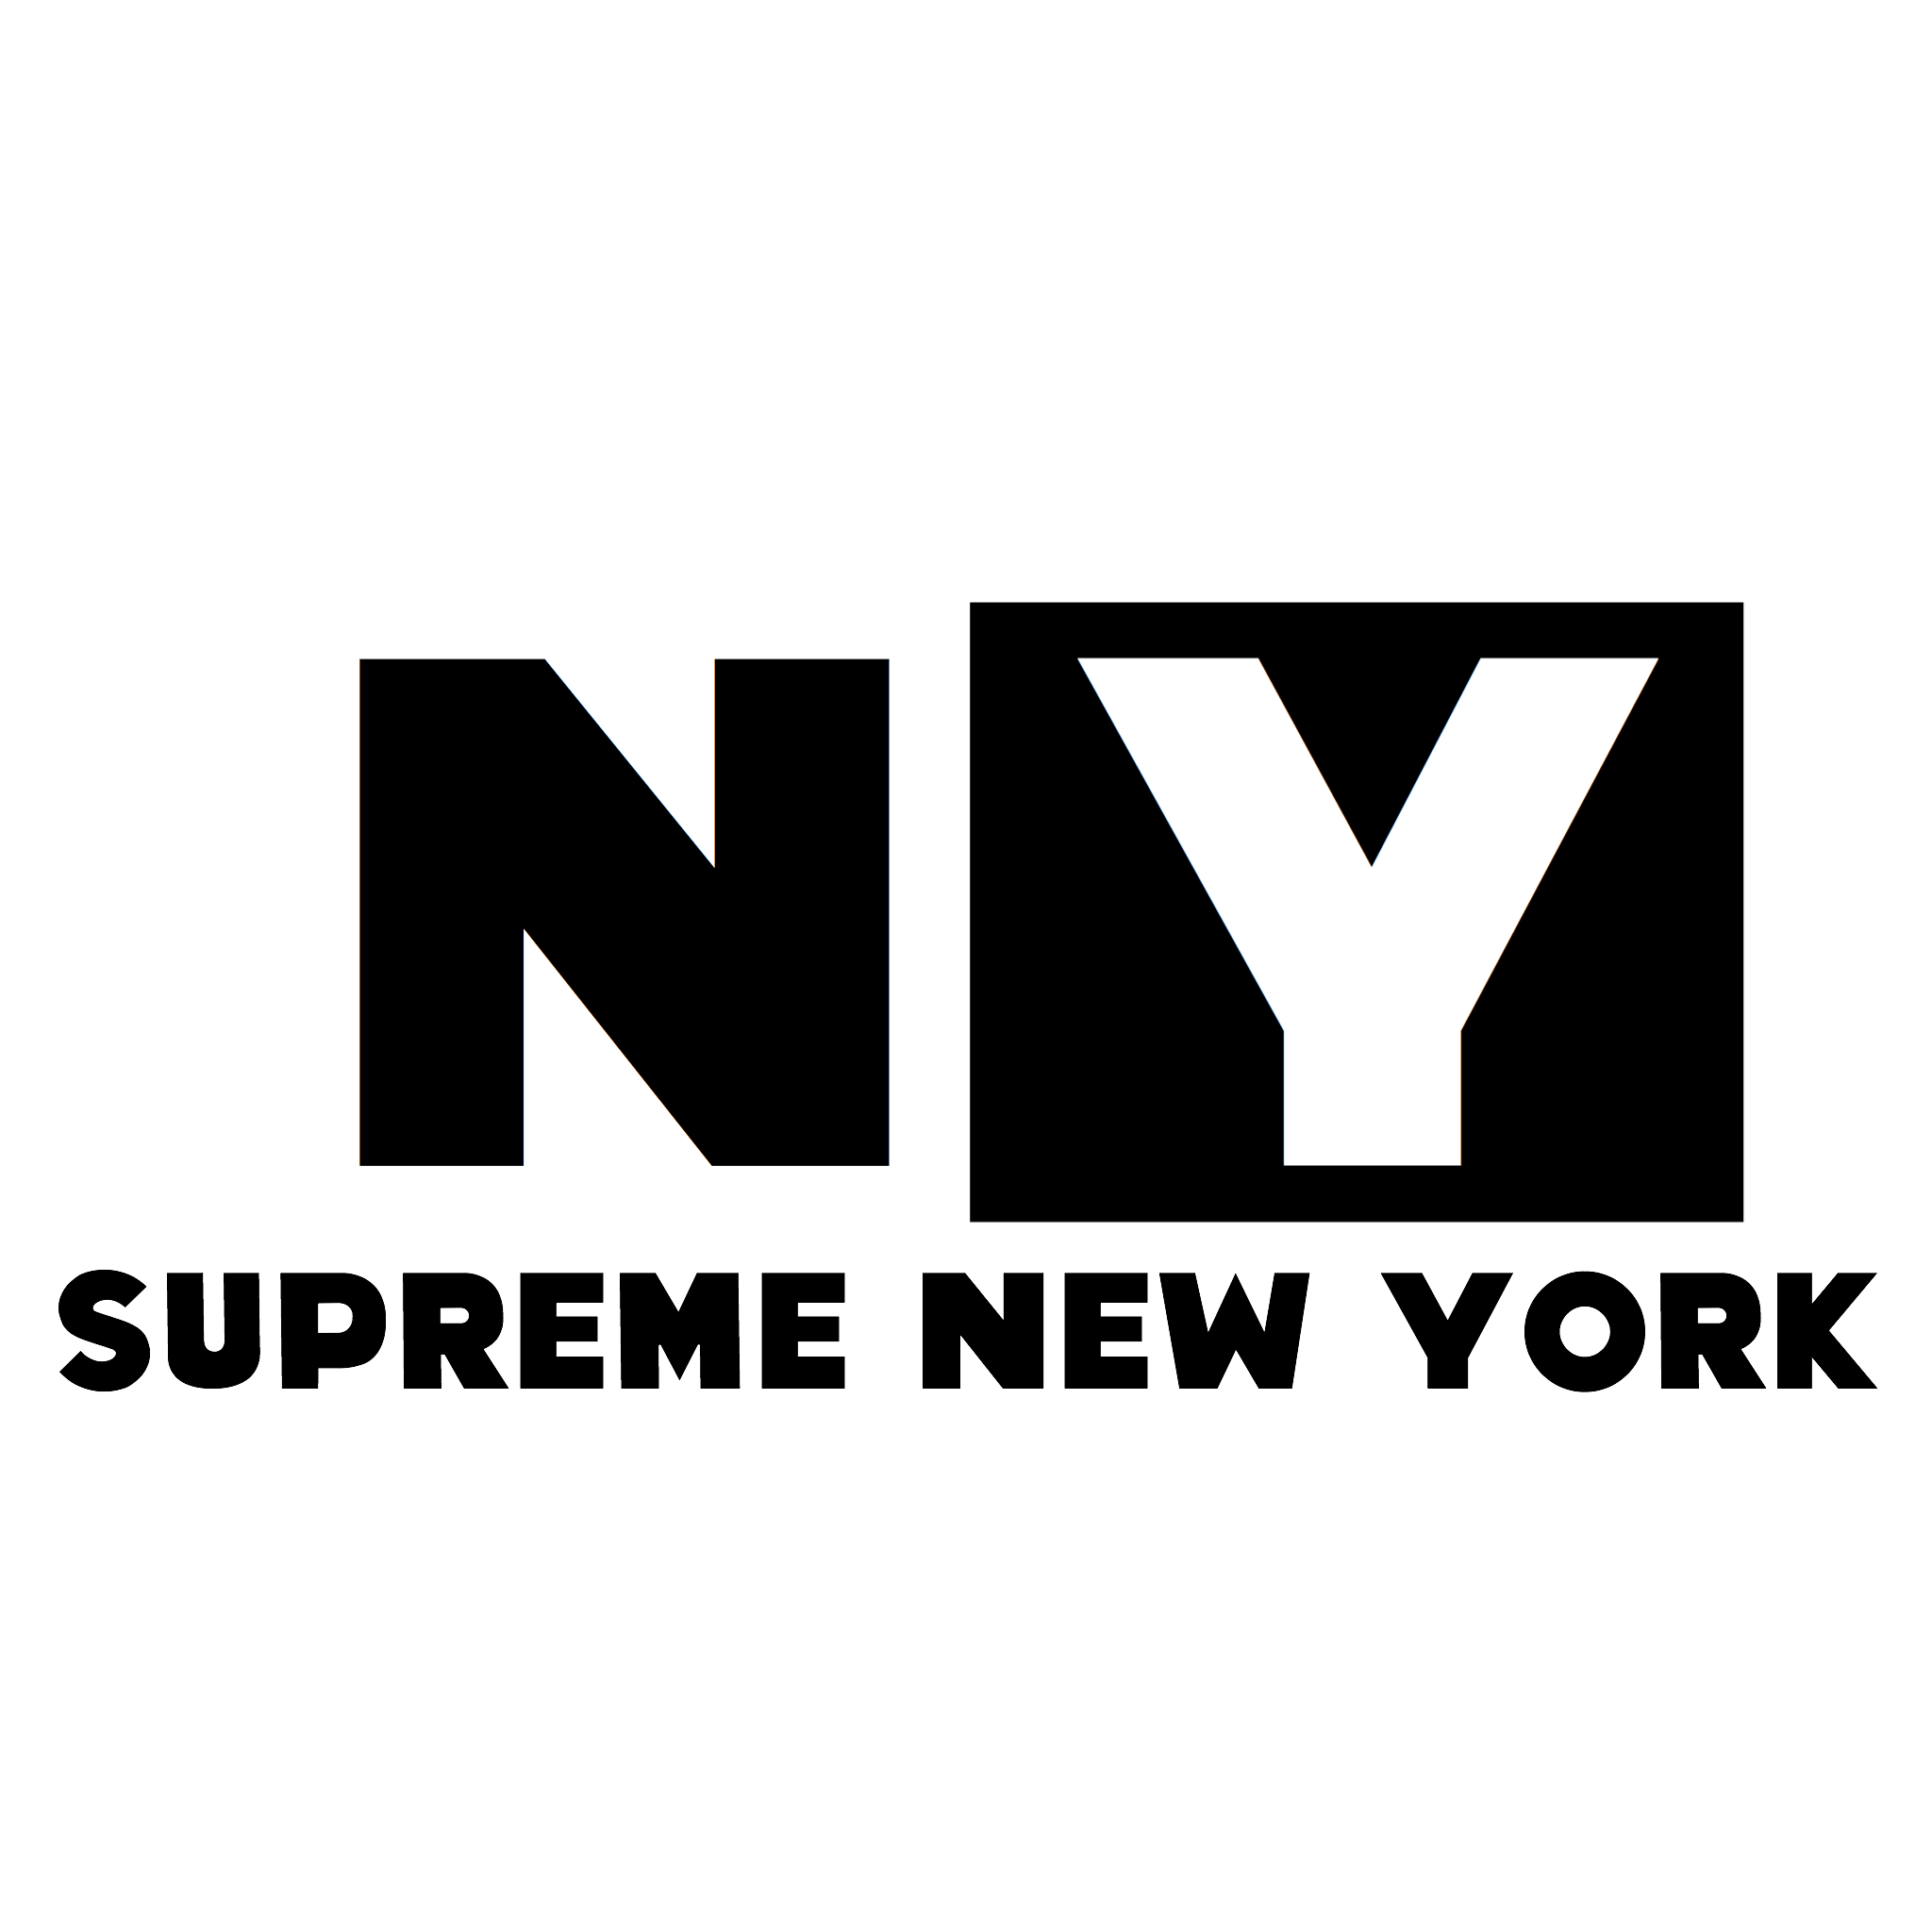 Supreme New York Logo - Supreme logo mock ups